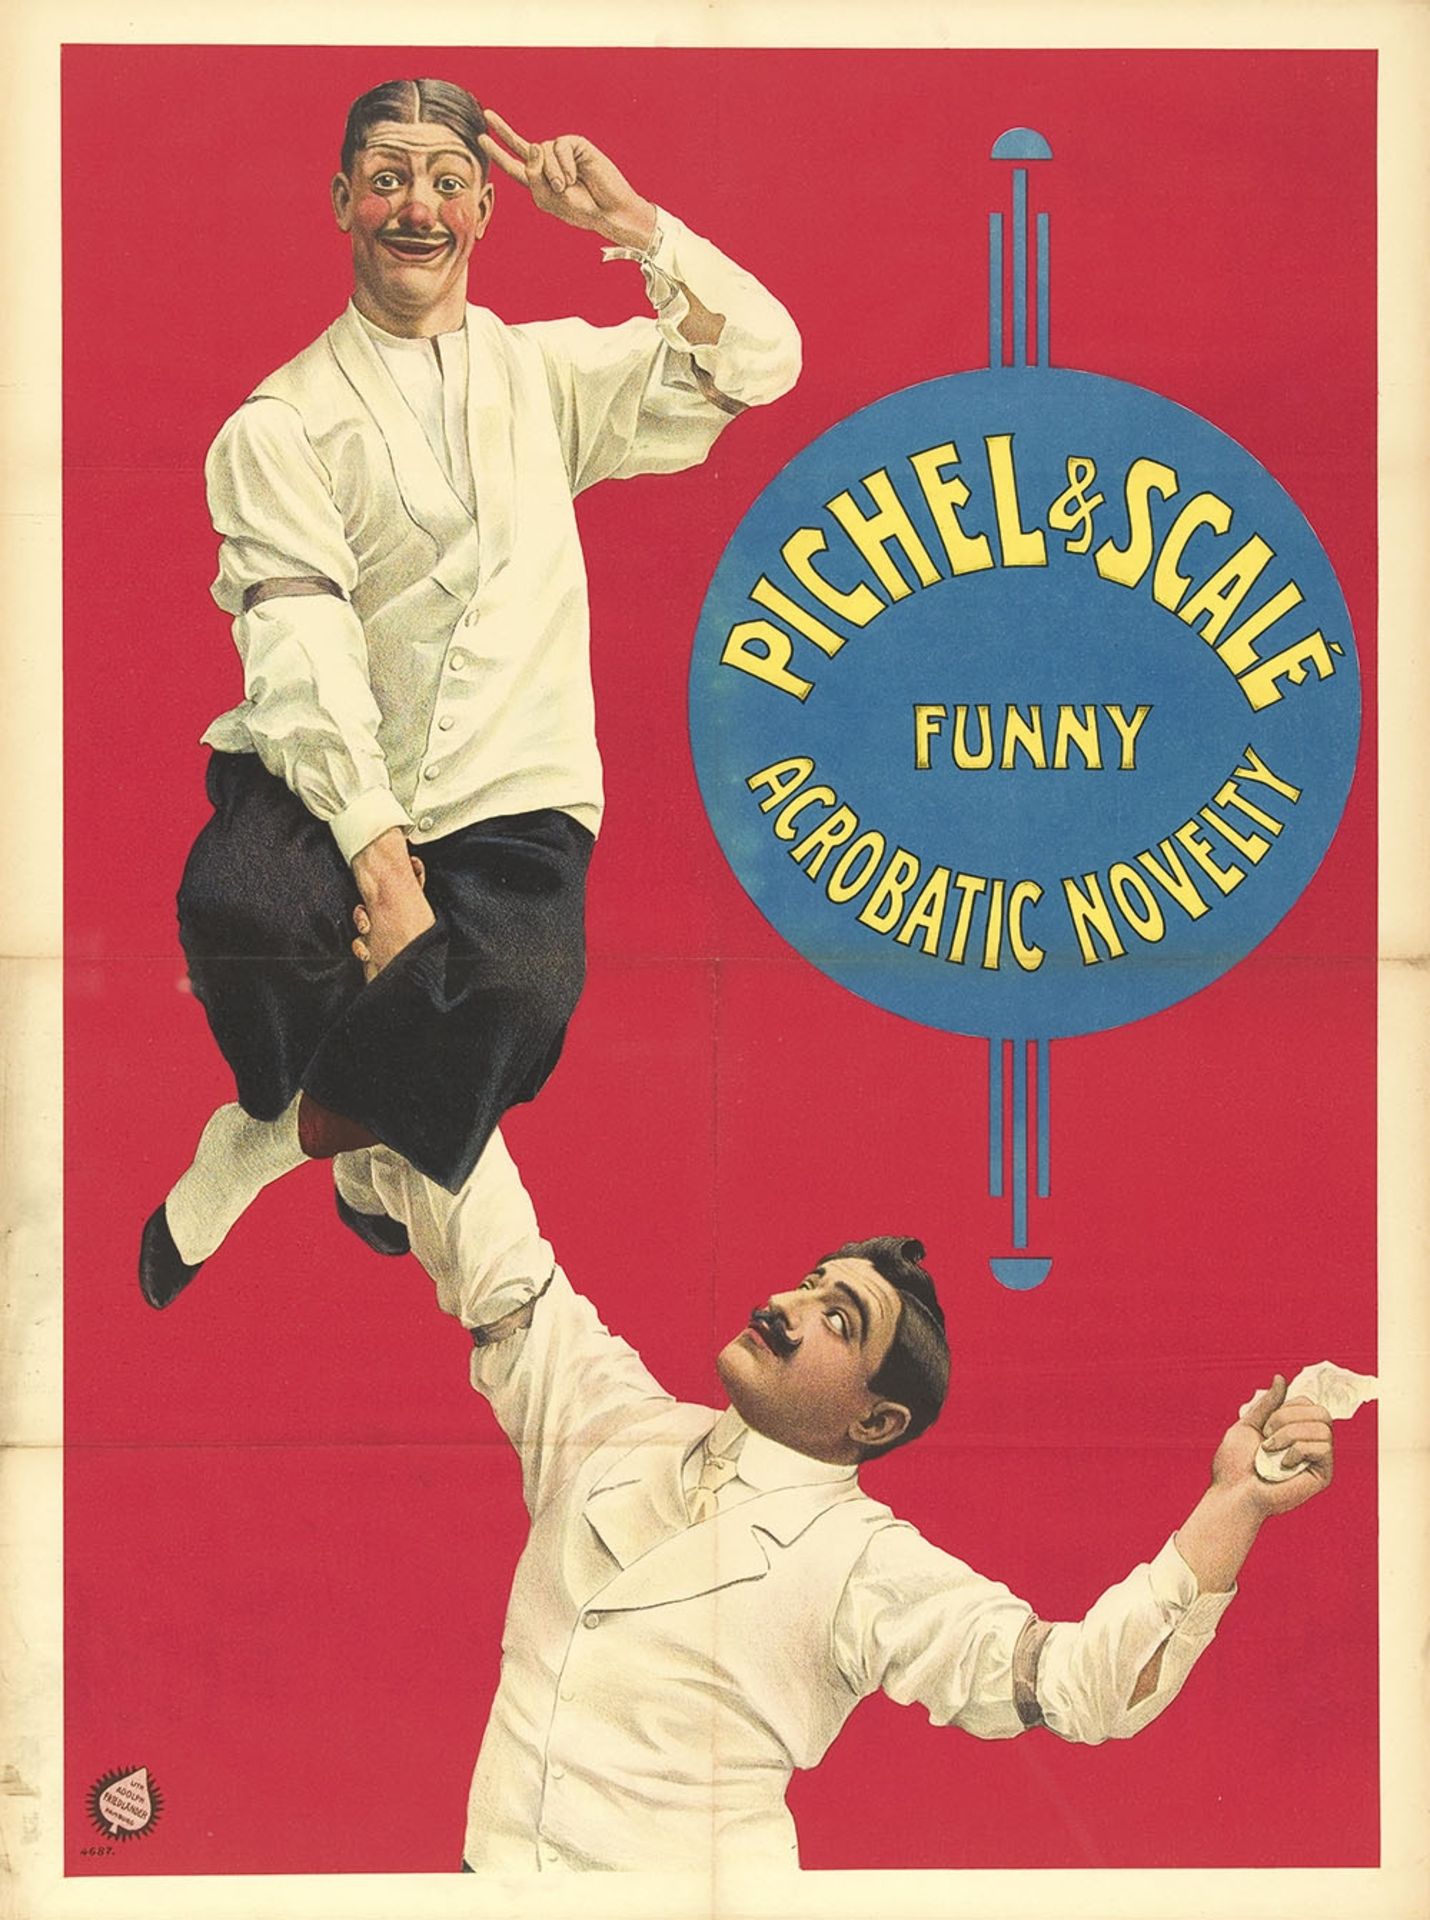 Pichel & Scalé, funny acrobatic novelty